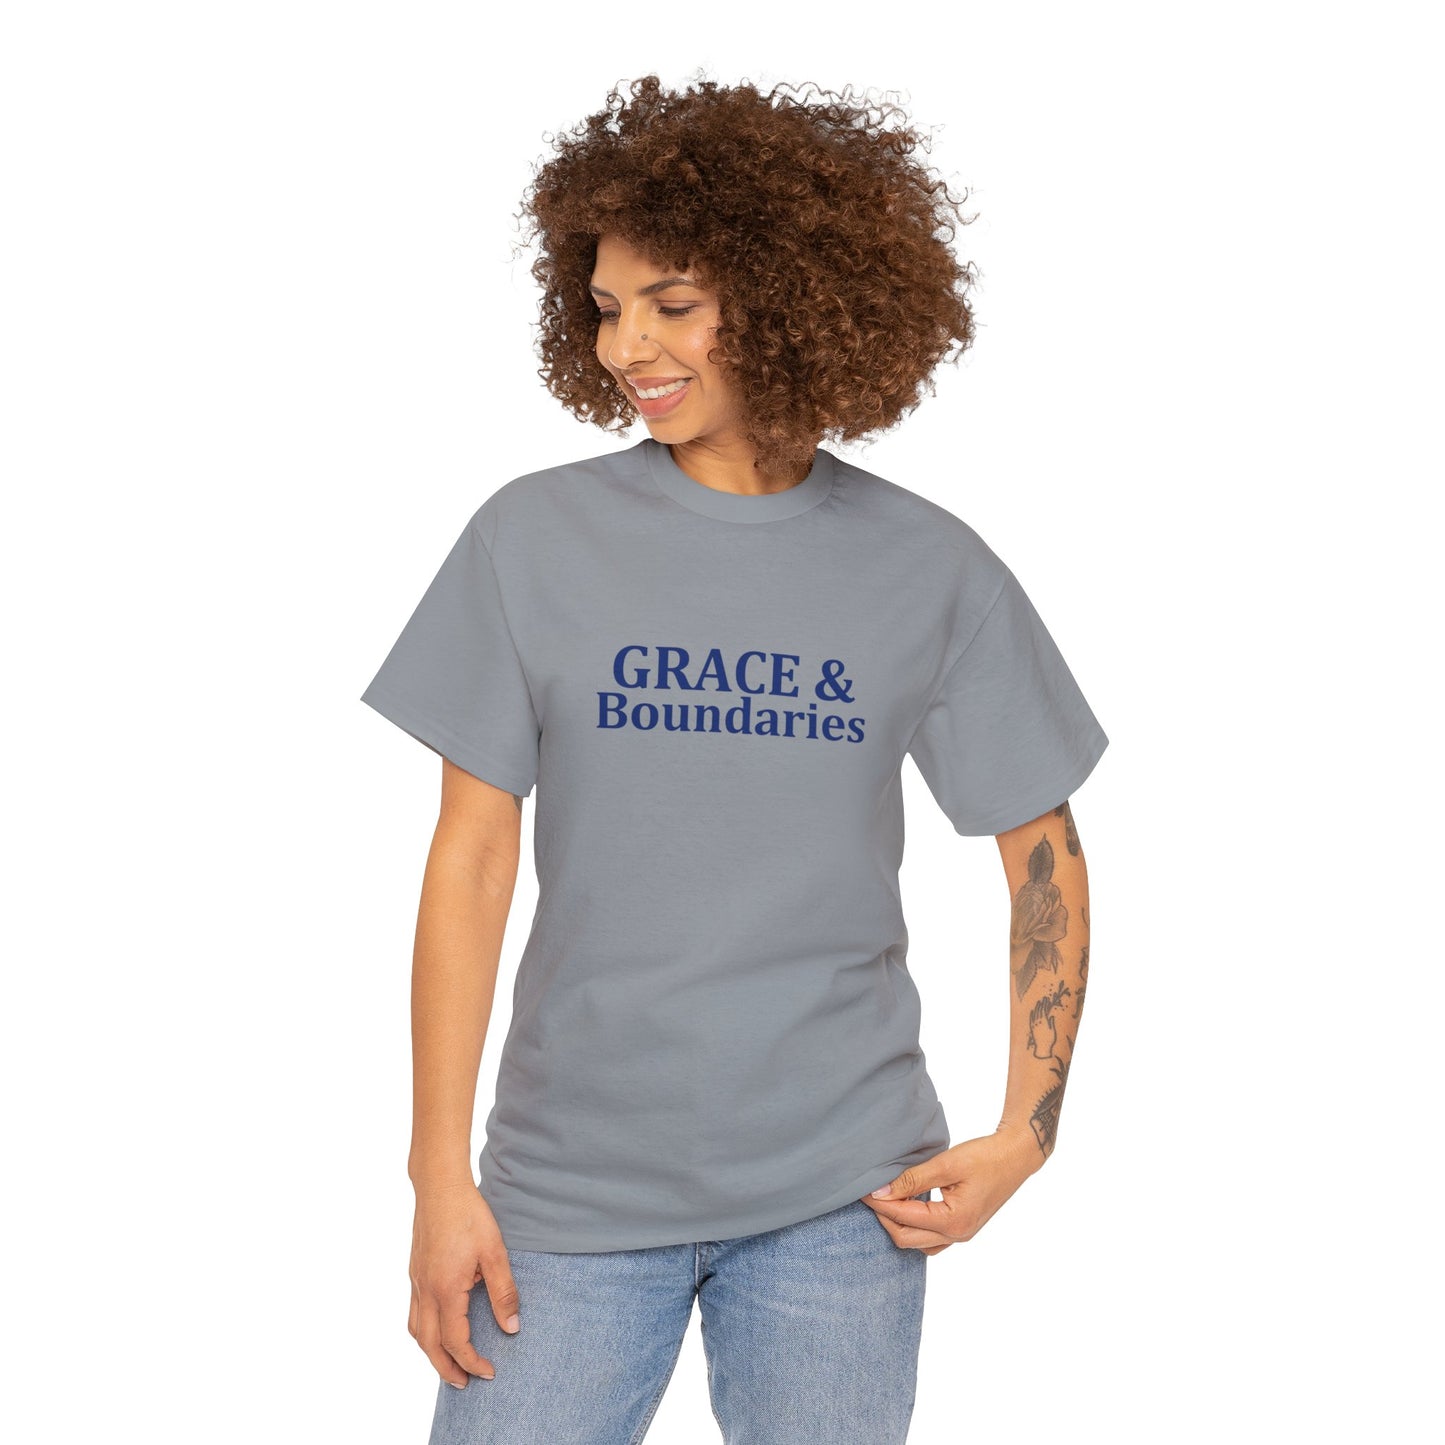 Grace & Boundaries Tee